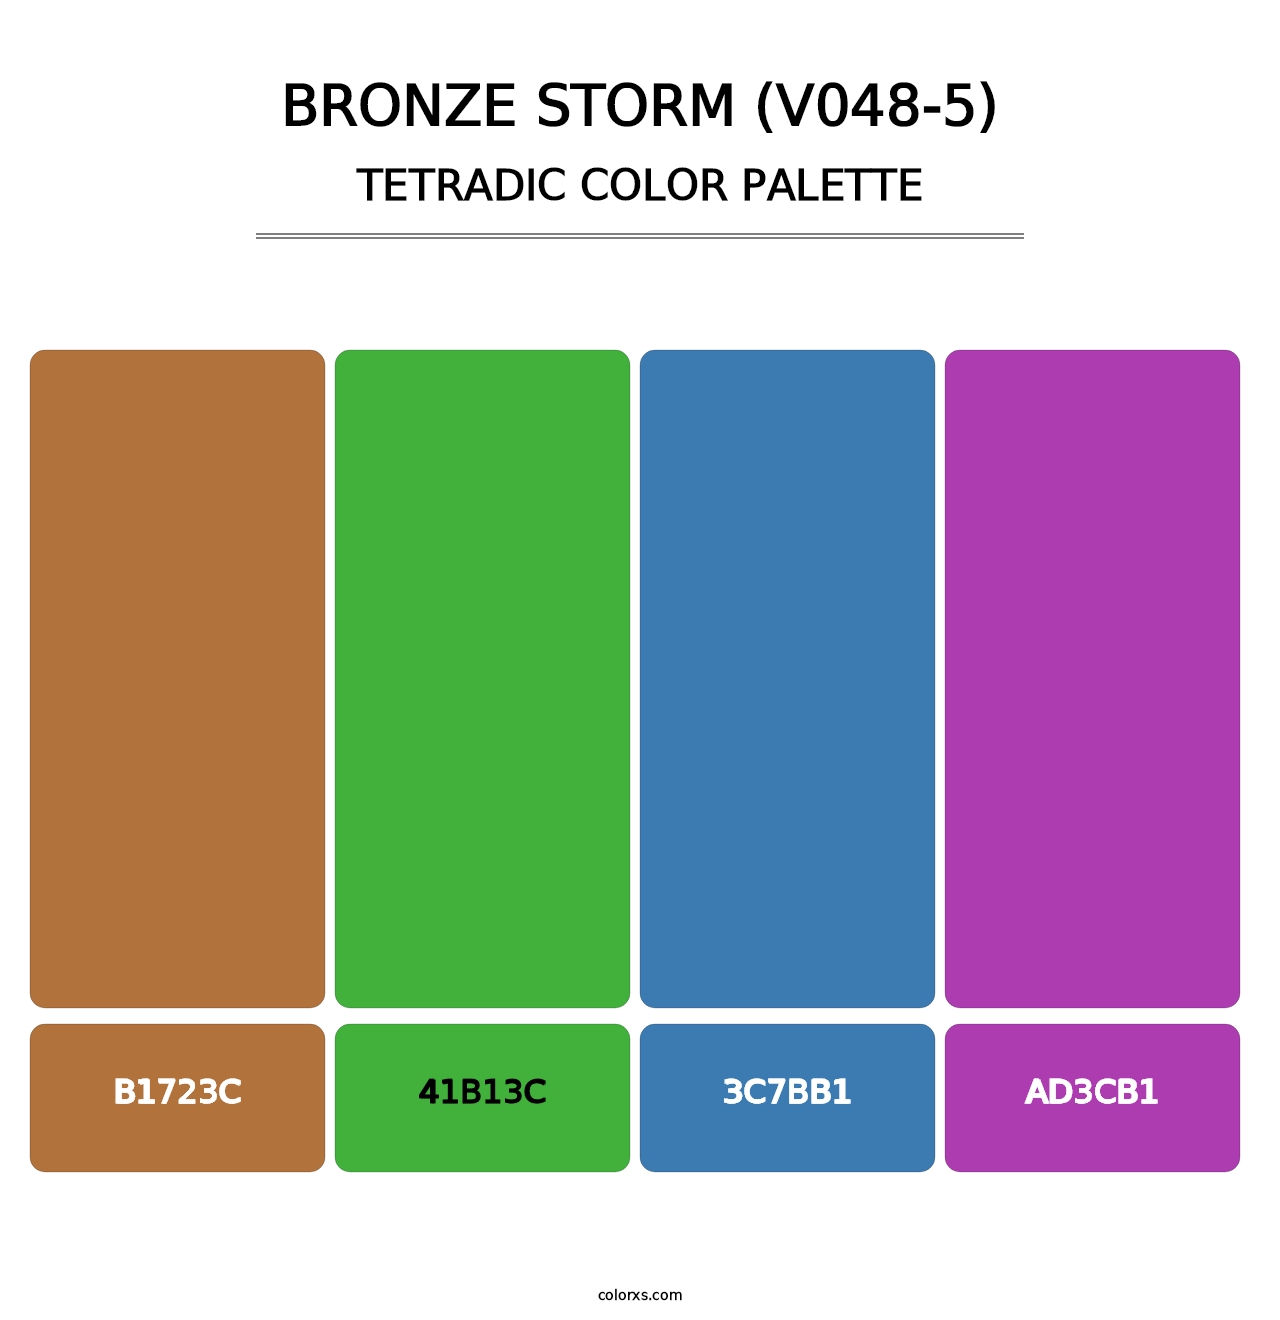 Bronze Storm (V048-5) - Tetradic Color Palette